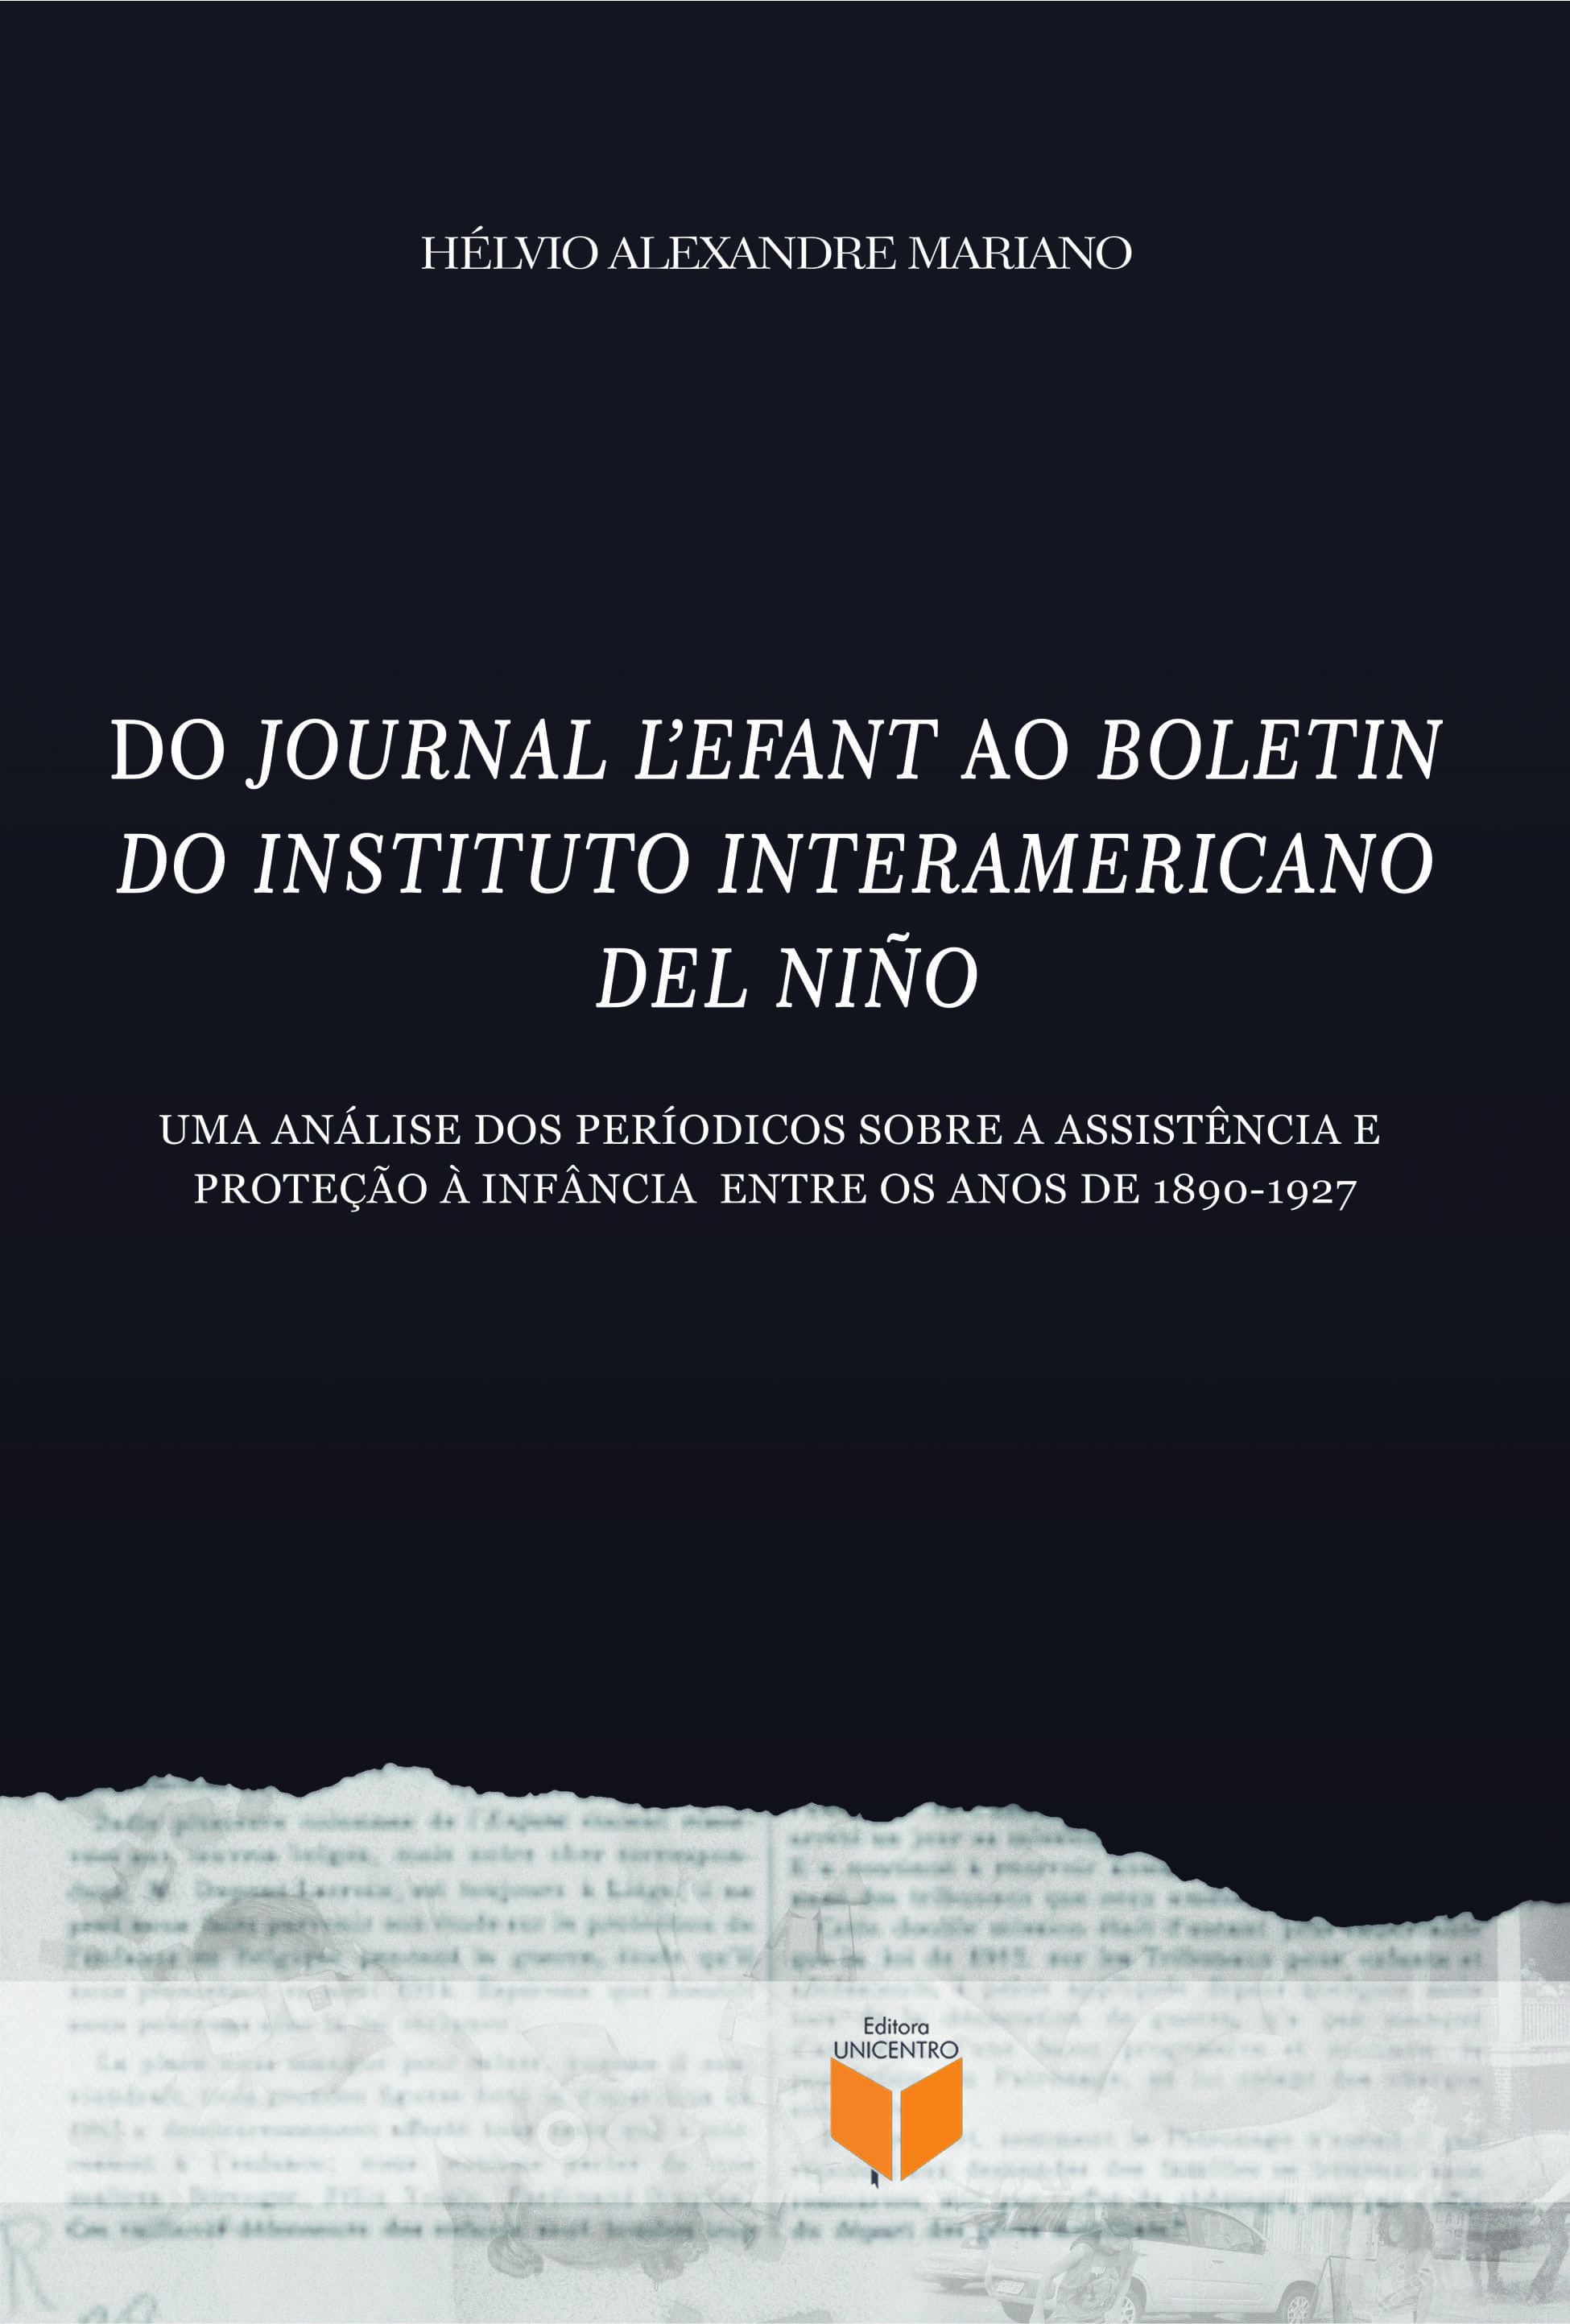 Do Journal L’enfant Ao Boletin Do Instituto Interamericano Del Niño